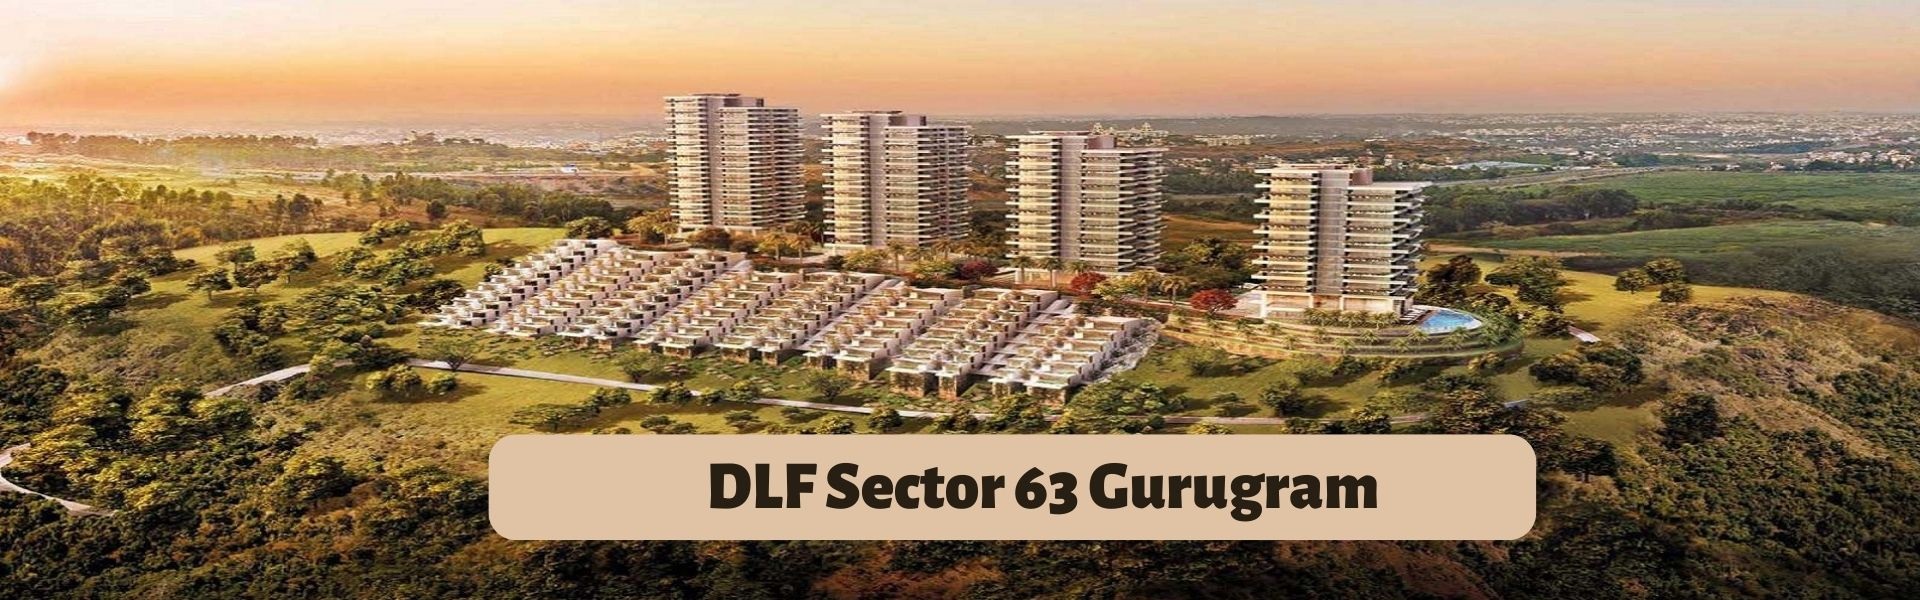 DLF Sector 63 Gurugram | Pre Launch Residential Apartments